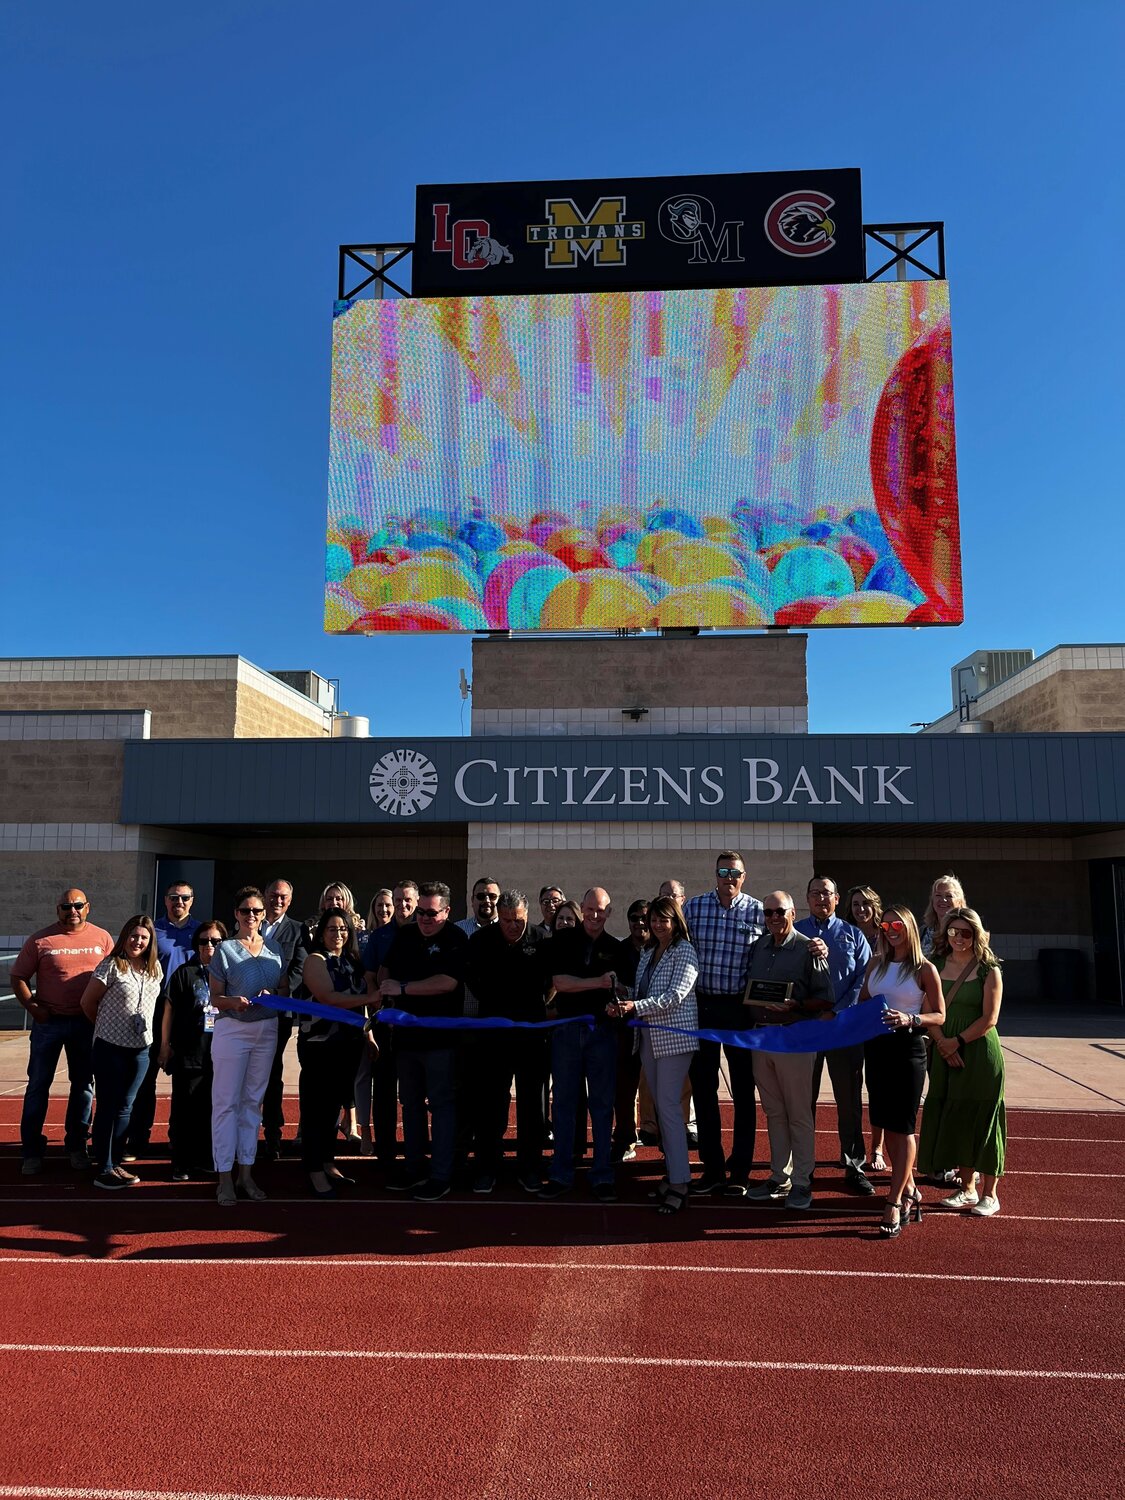 Representatives from LCPS and Citizens Bank gathered May 25 to cut the ribbon dedicating the new scoreboard at the Field of Dreams.